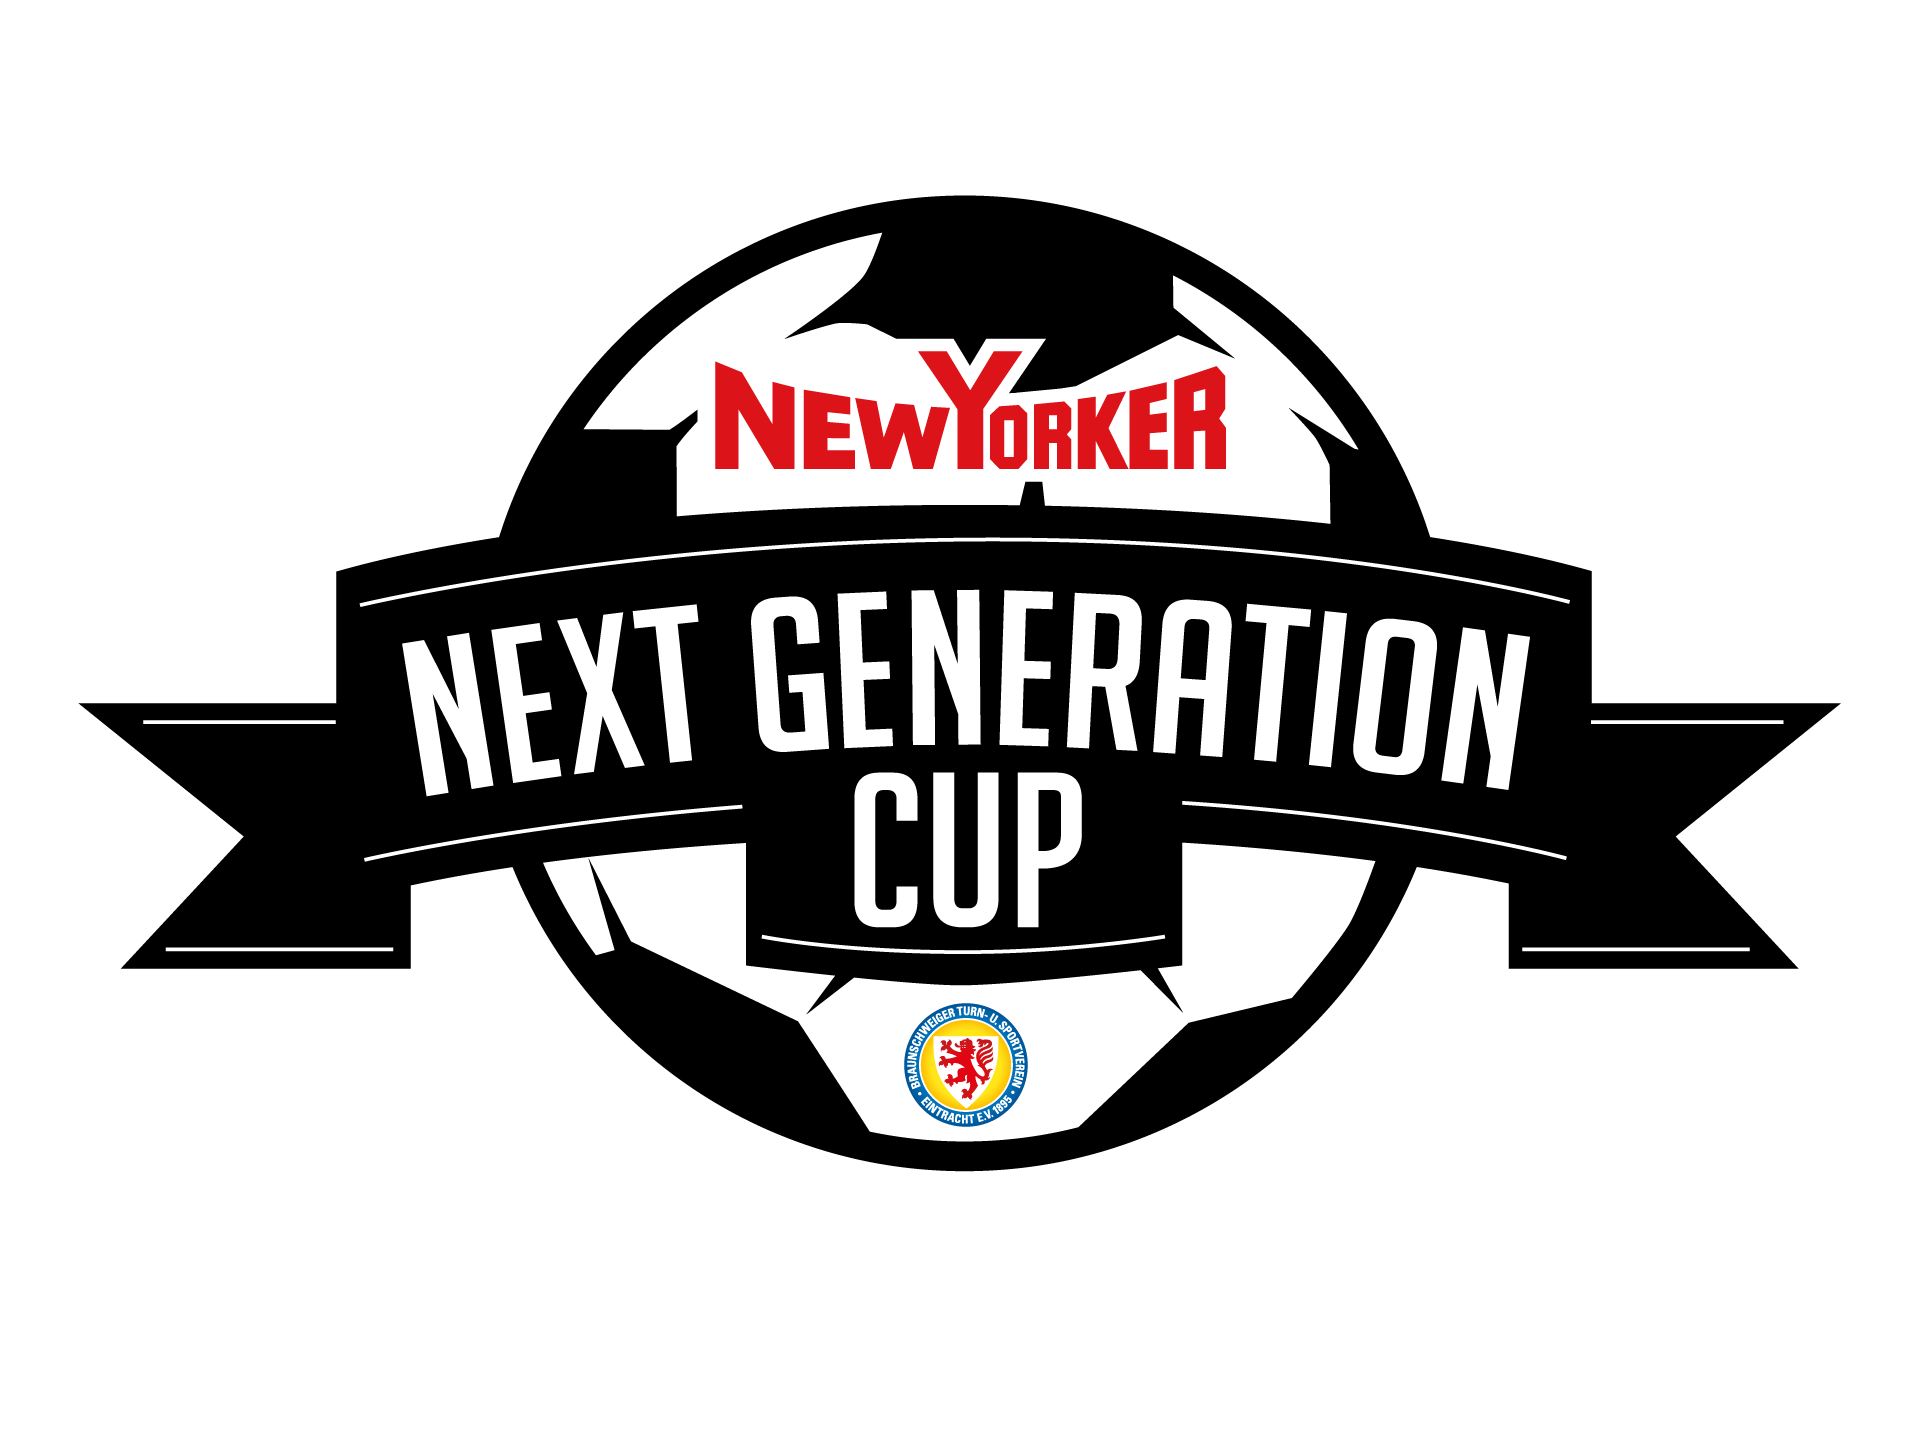 NewYorker Next Generation Cup